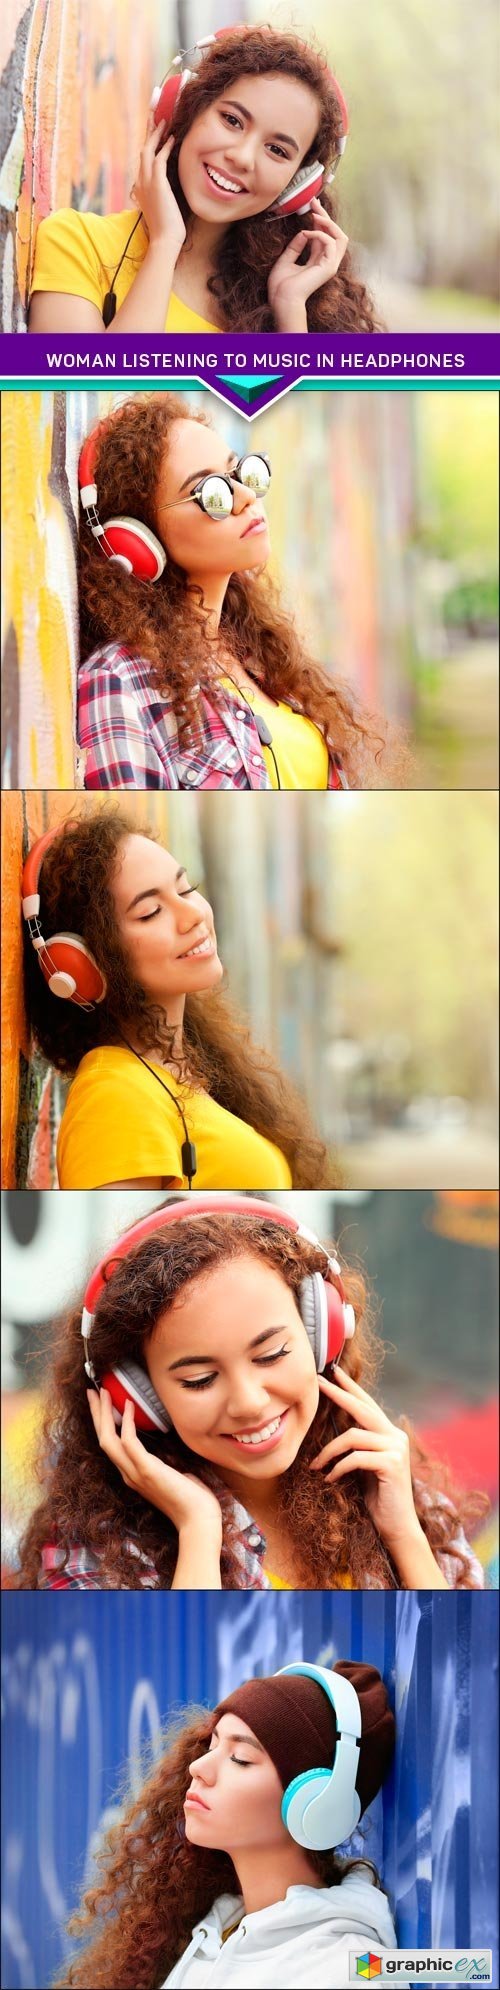 Woman listening to music in headphones 5x JPEG